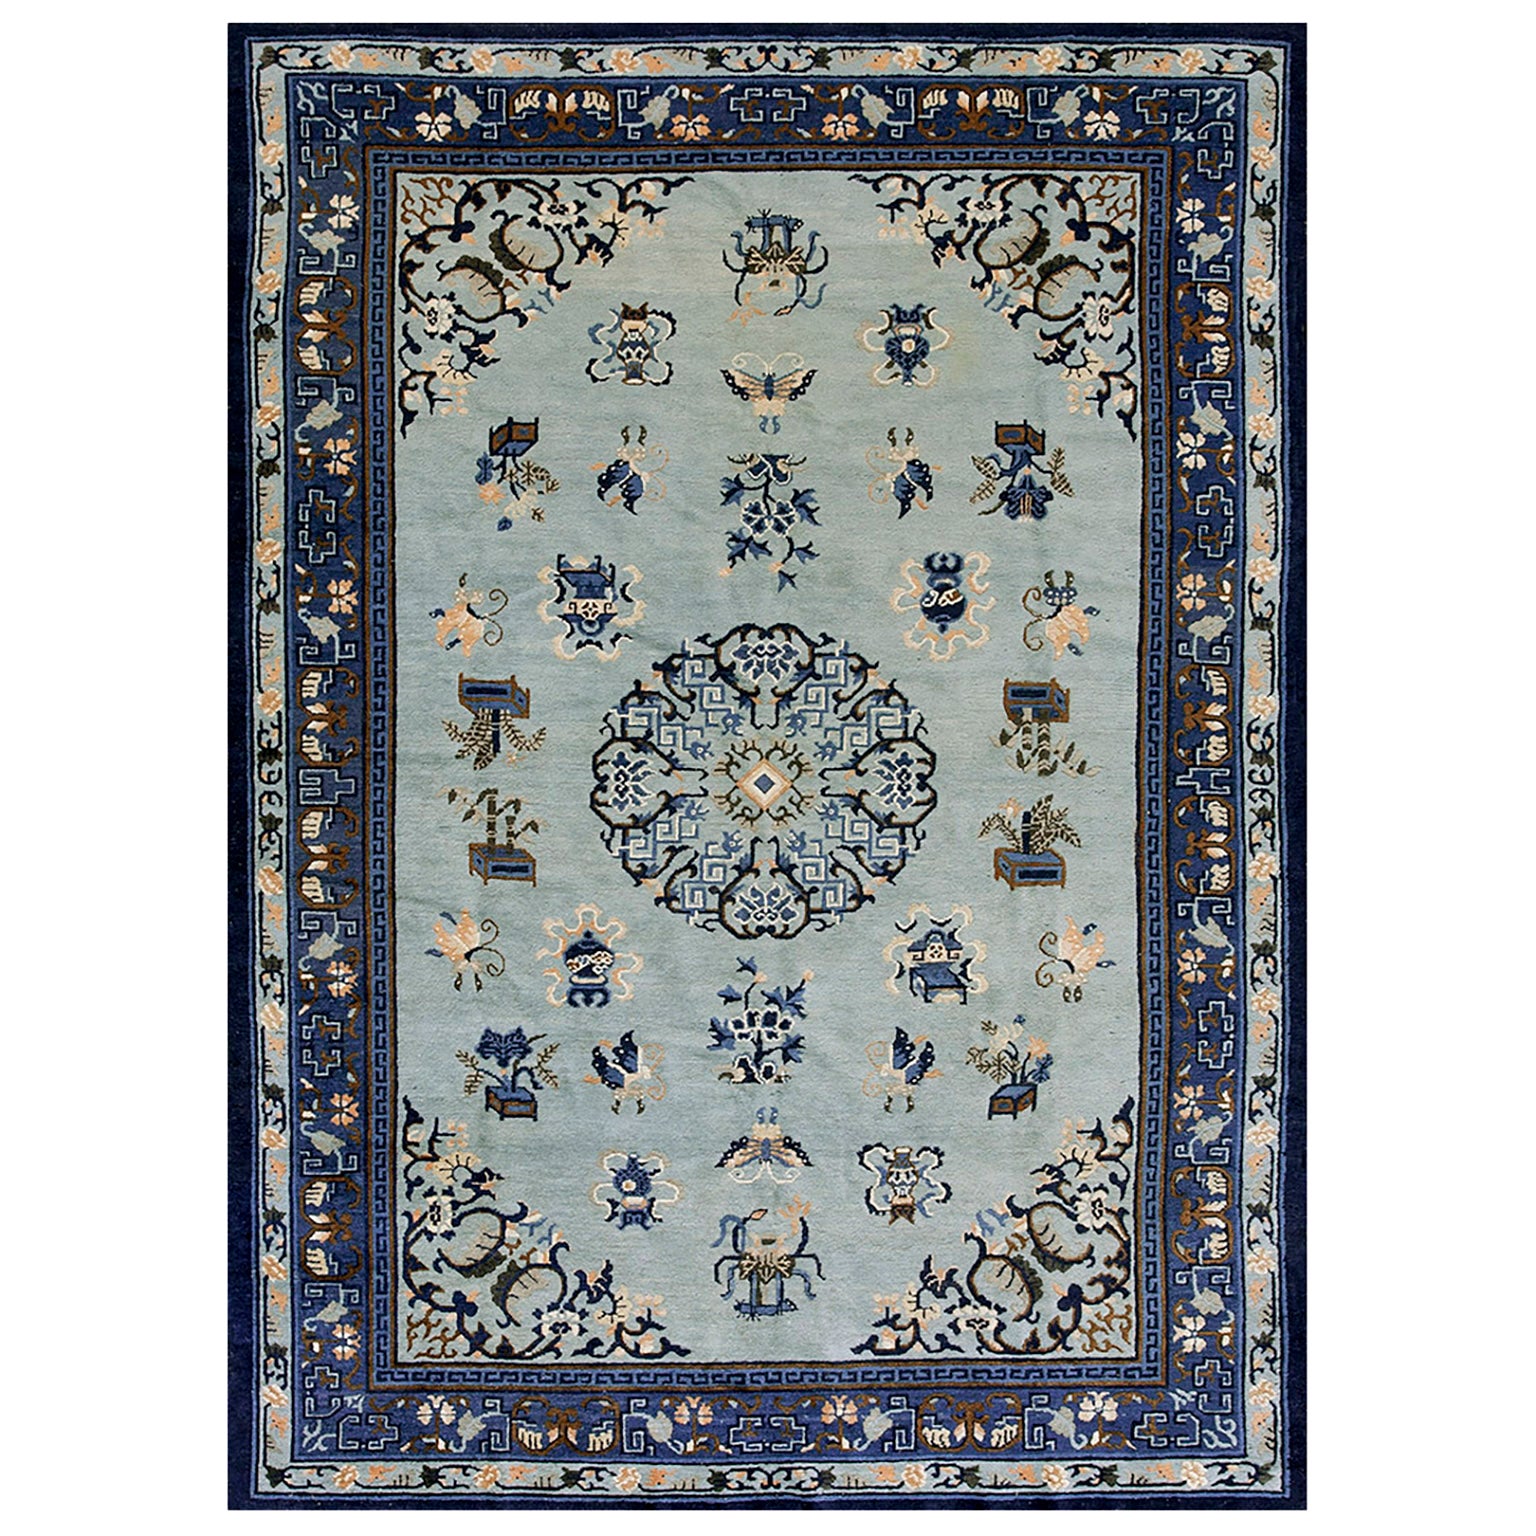 Late 19th Century Chinese Peking Carpet ( 6' x 8'6" - 183 x 260 )